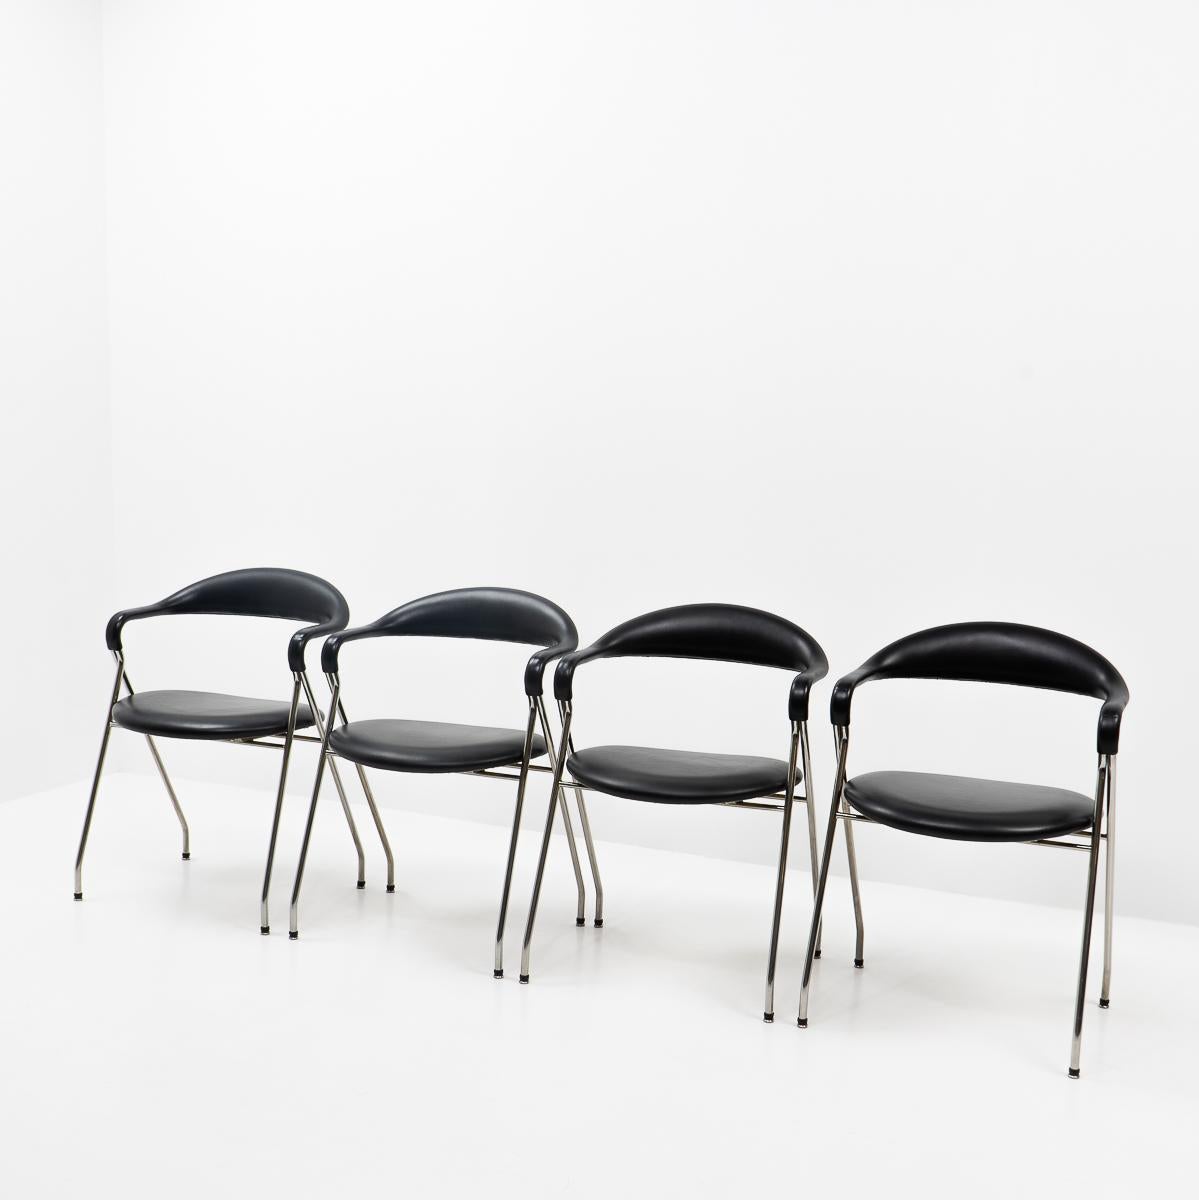 Swiss Design Classic Hans Eichenberger Saffa Chairs, Set of Four, 1980s For Sale 8